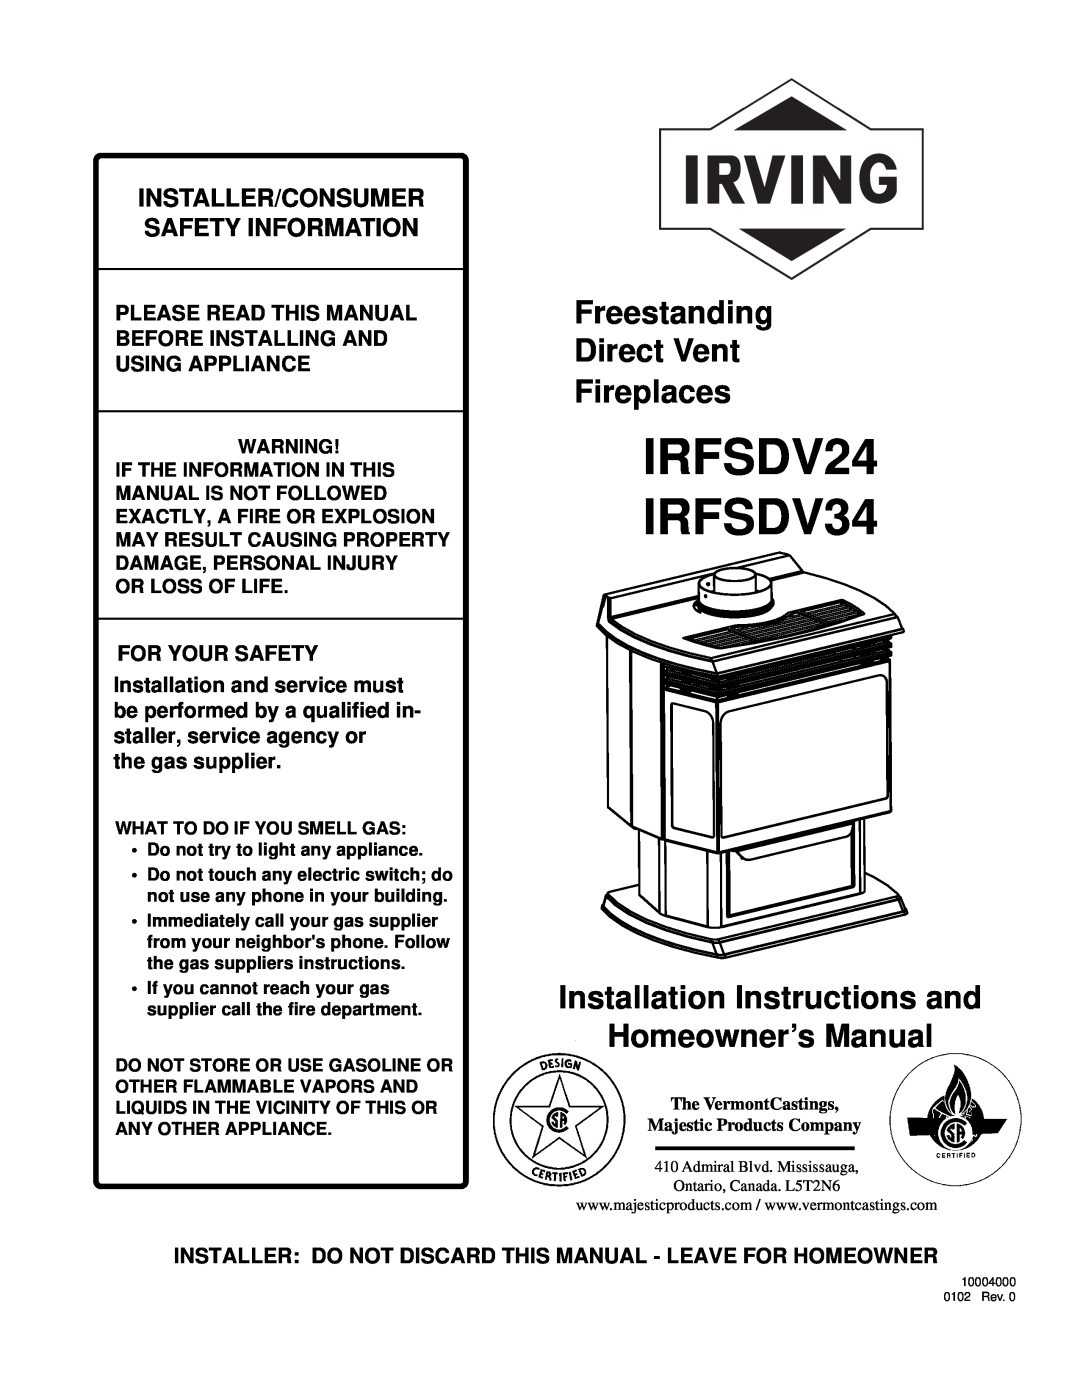 Vermont Casting installation instructions IRFSDV24 IRFSDV34, Freestanding Direct Vent Fireplaces 